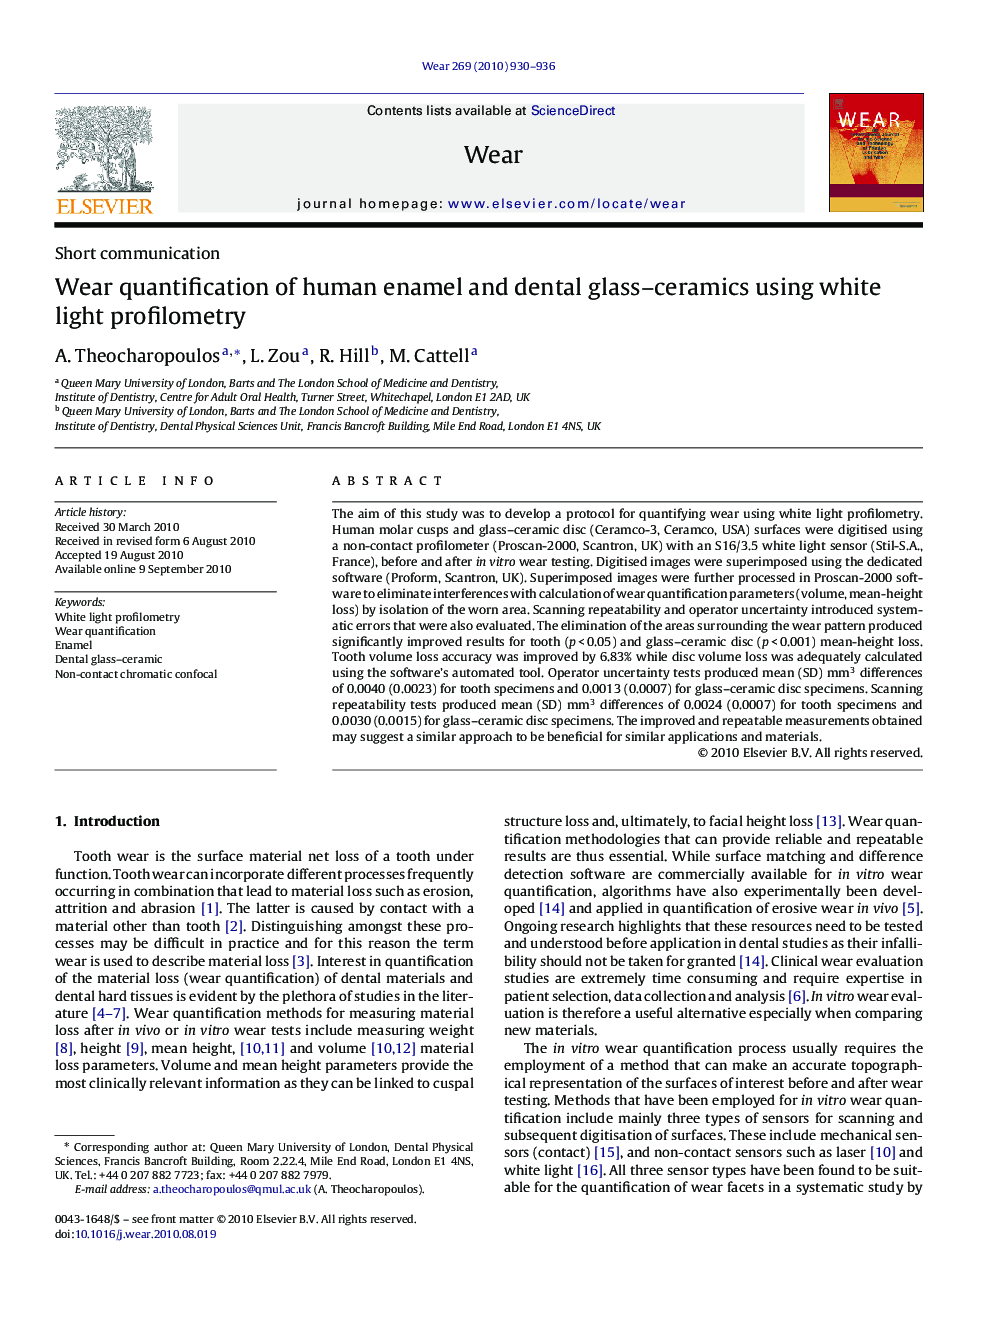 Wear quantification of human enamel and dental glass-ceramics using white light profilometry